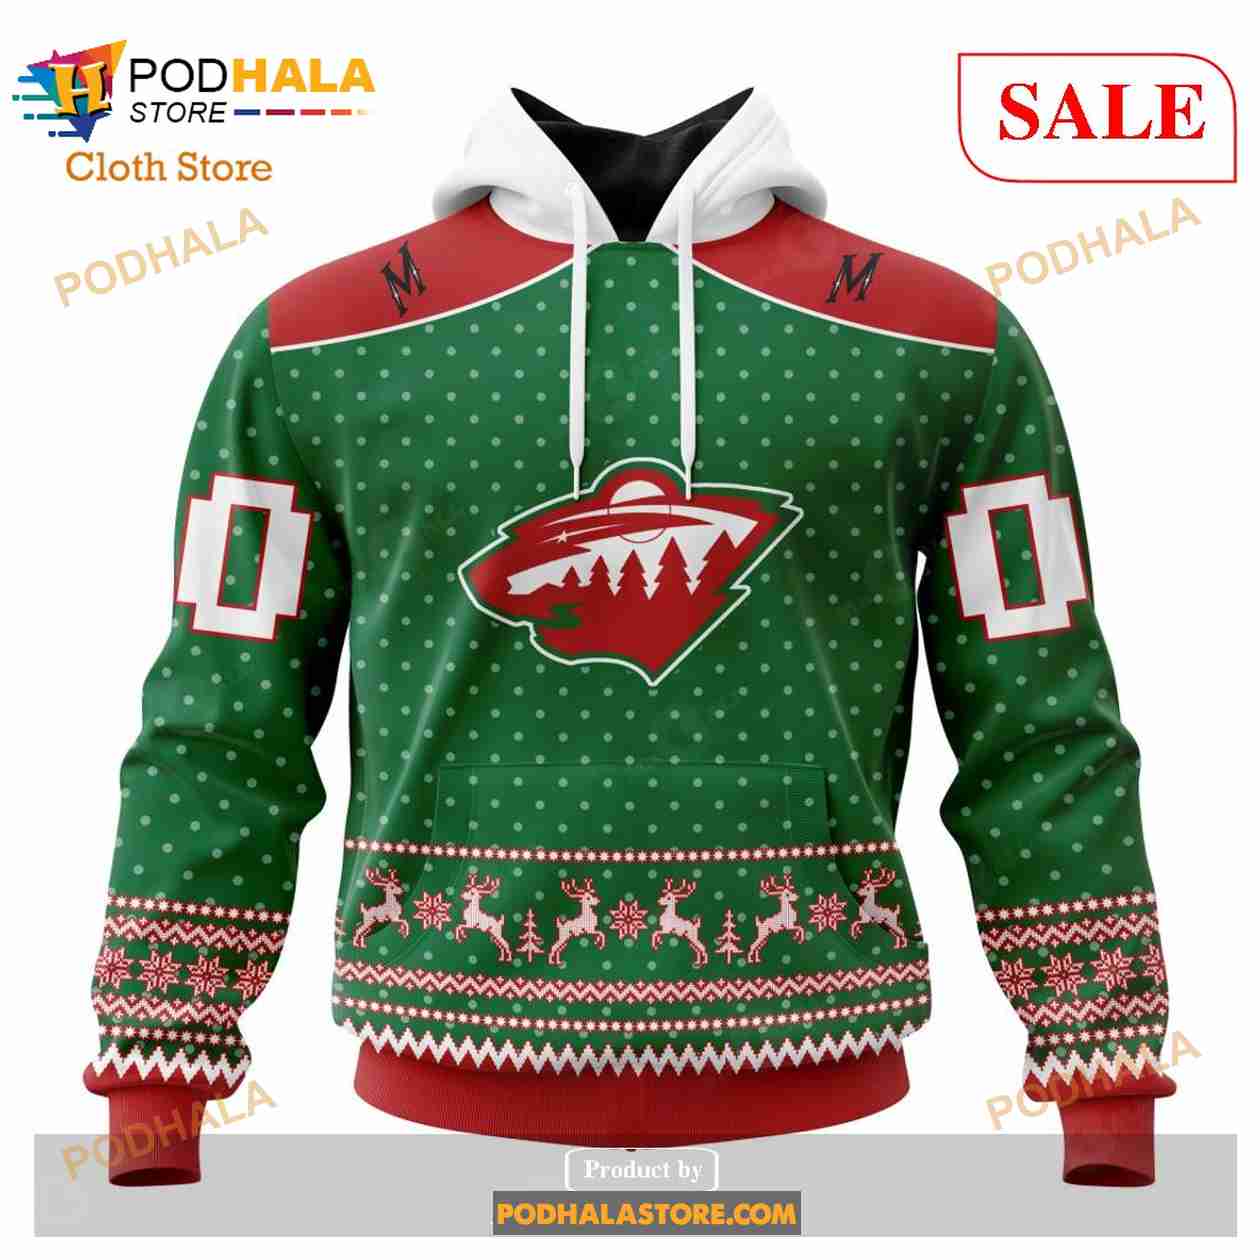 Minnesota Wild Sweatshirt NHL Fan Apparel & Souvenirs for sale